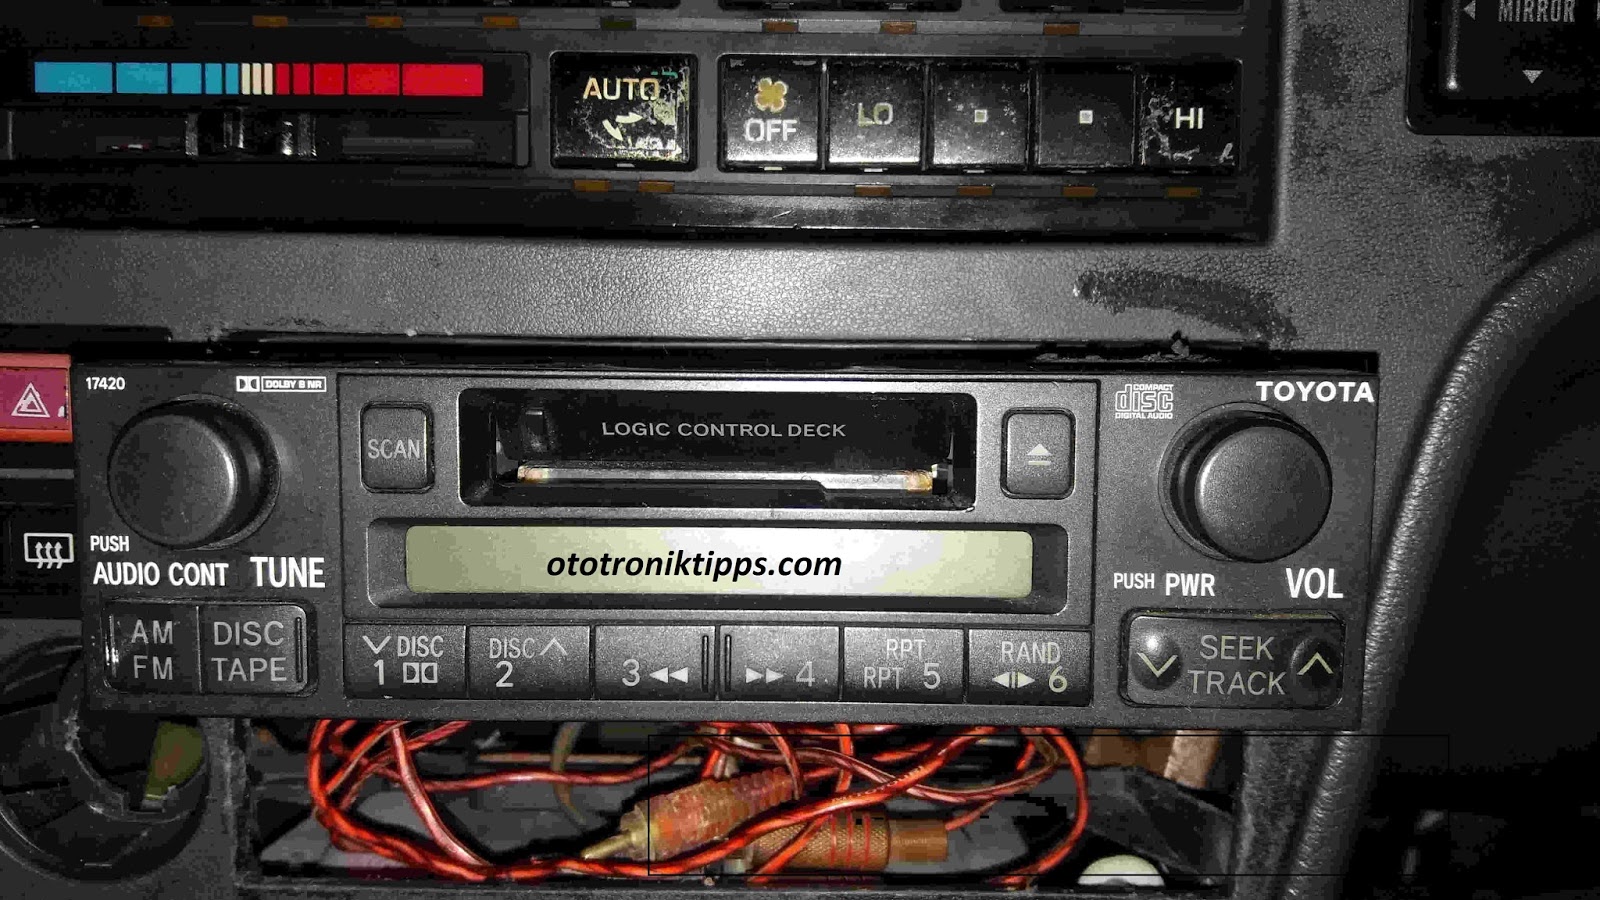 64 Cara Modifikasi Tape Mobil Avanza Pakai Usb Terbaru | Fire Modif